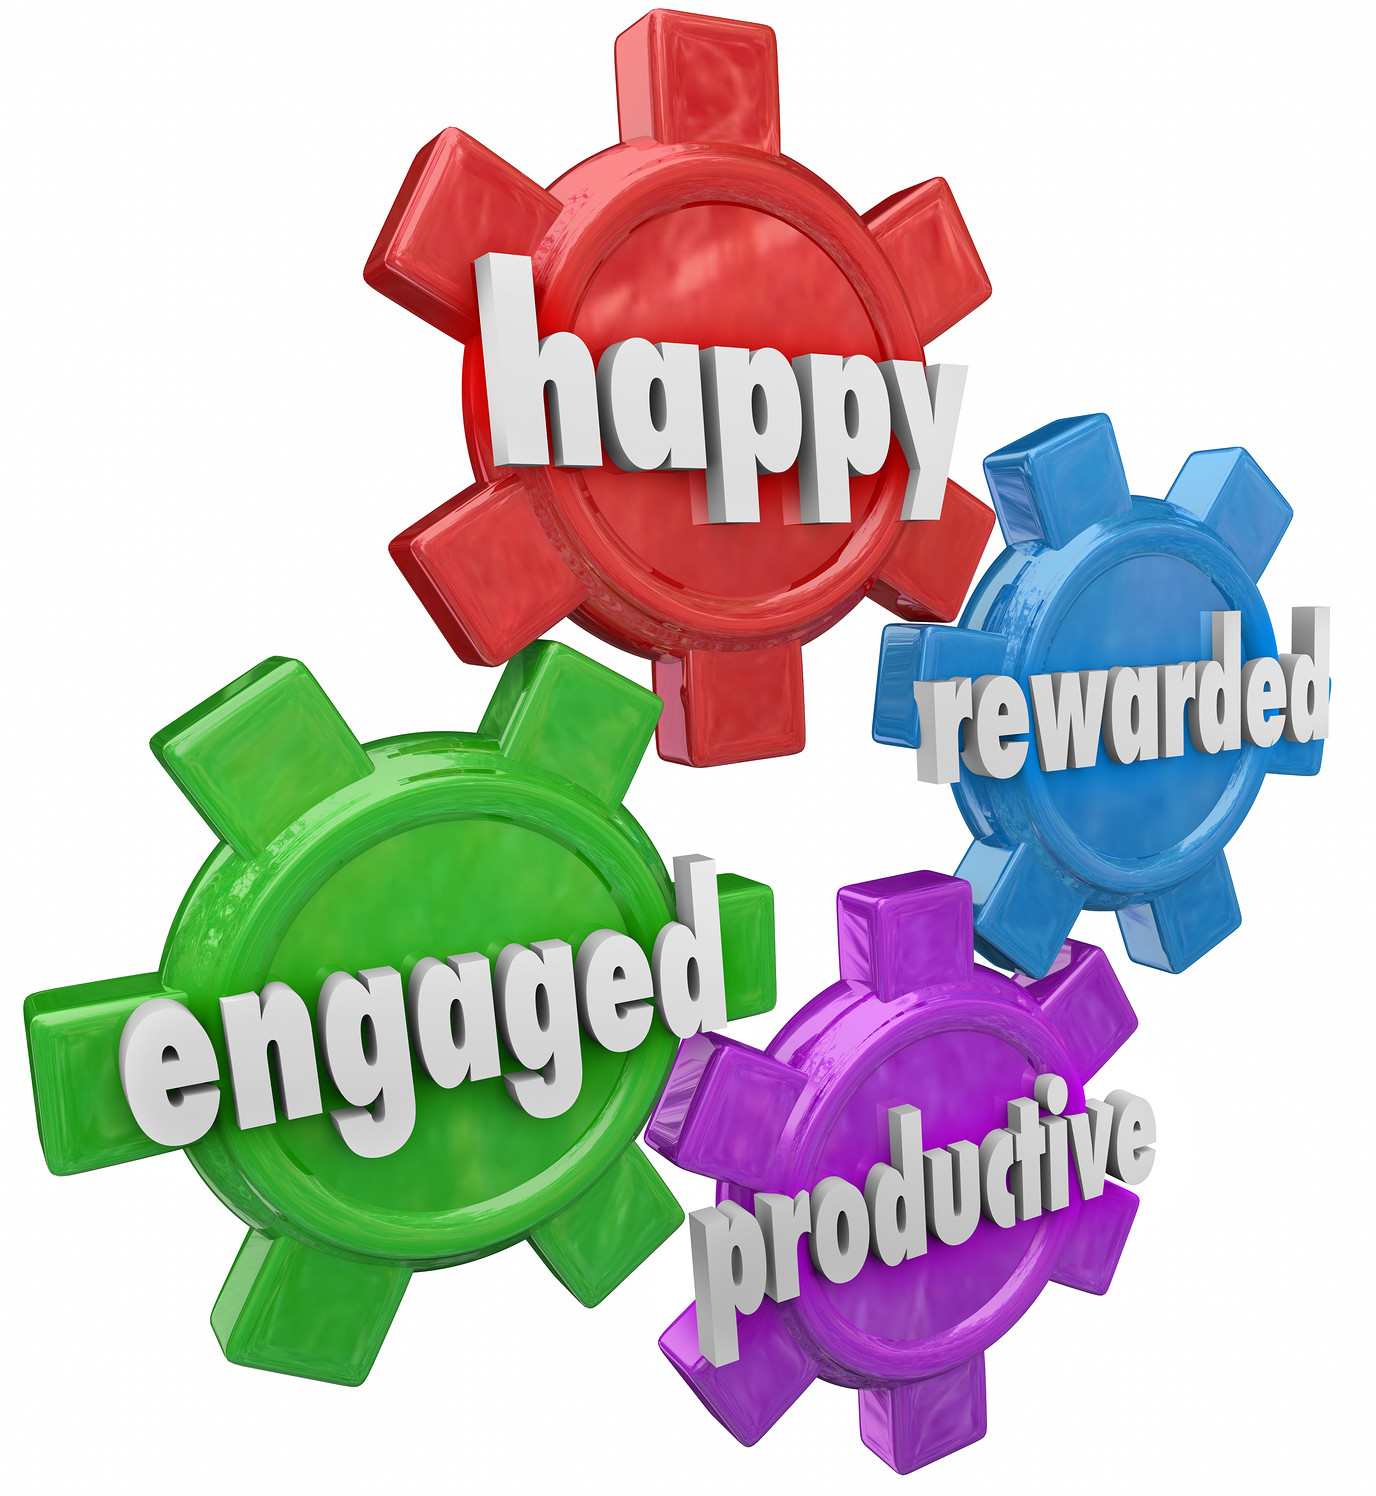 engaged employees = employee retention